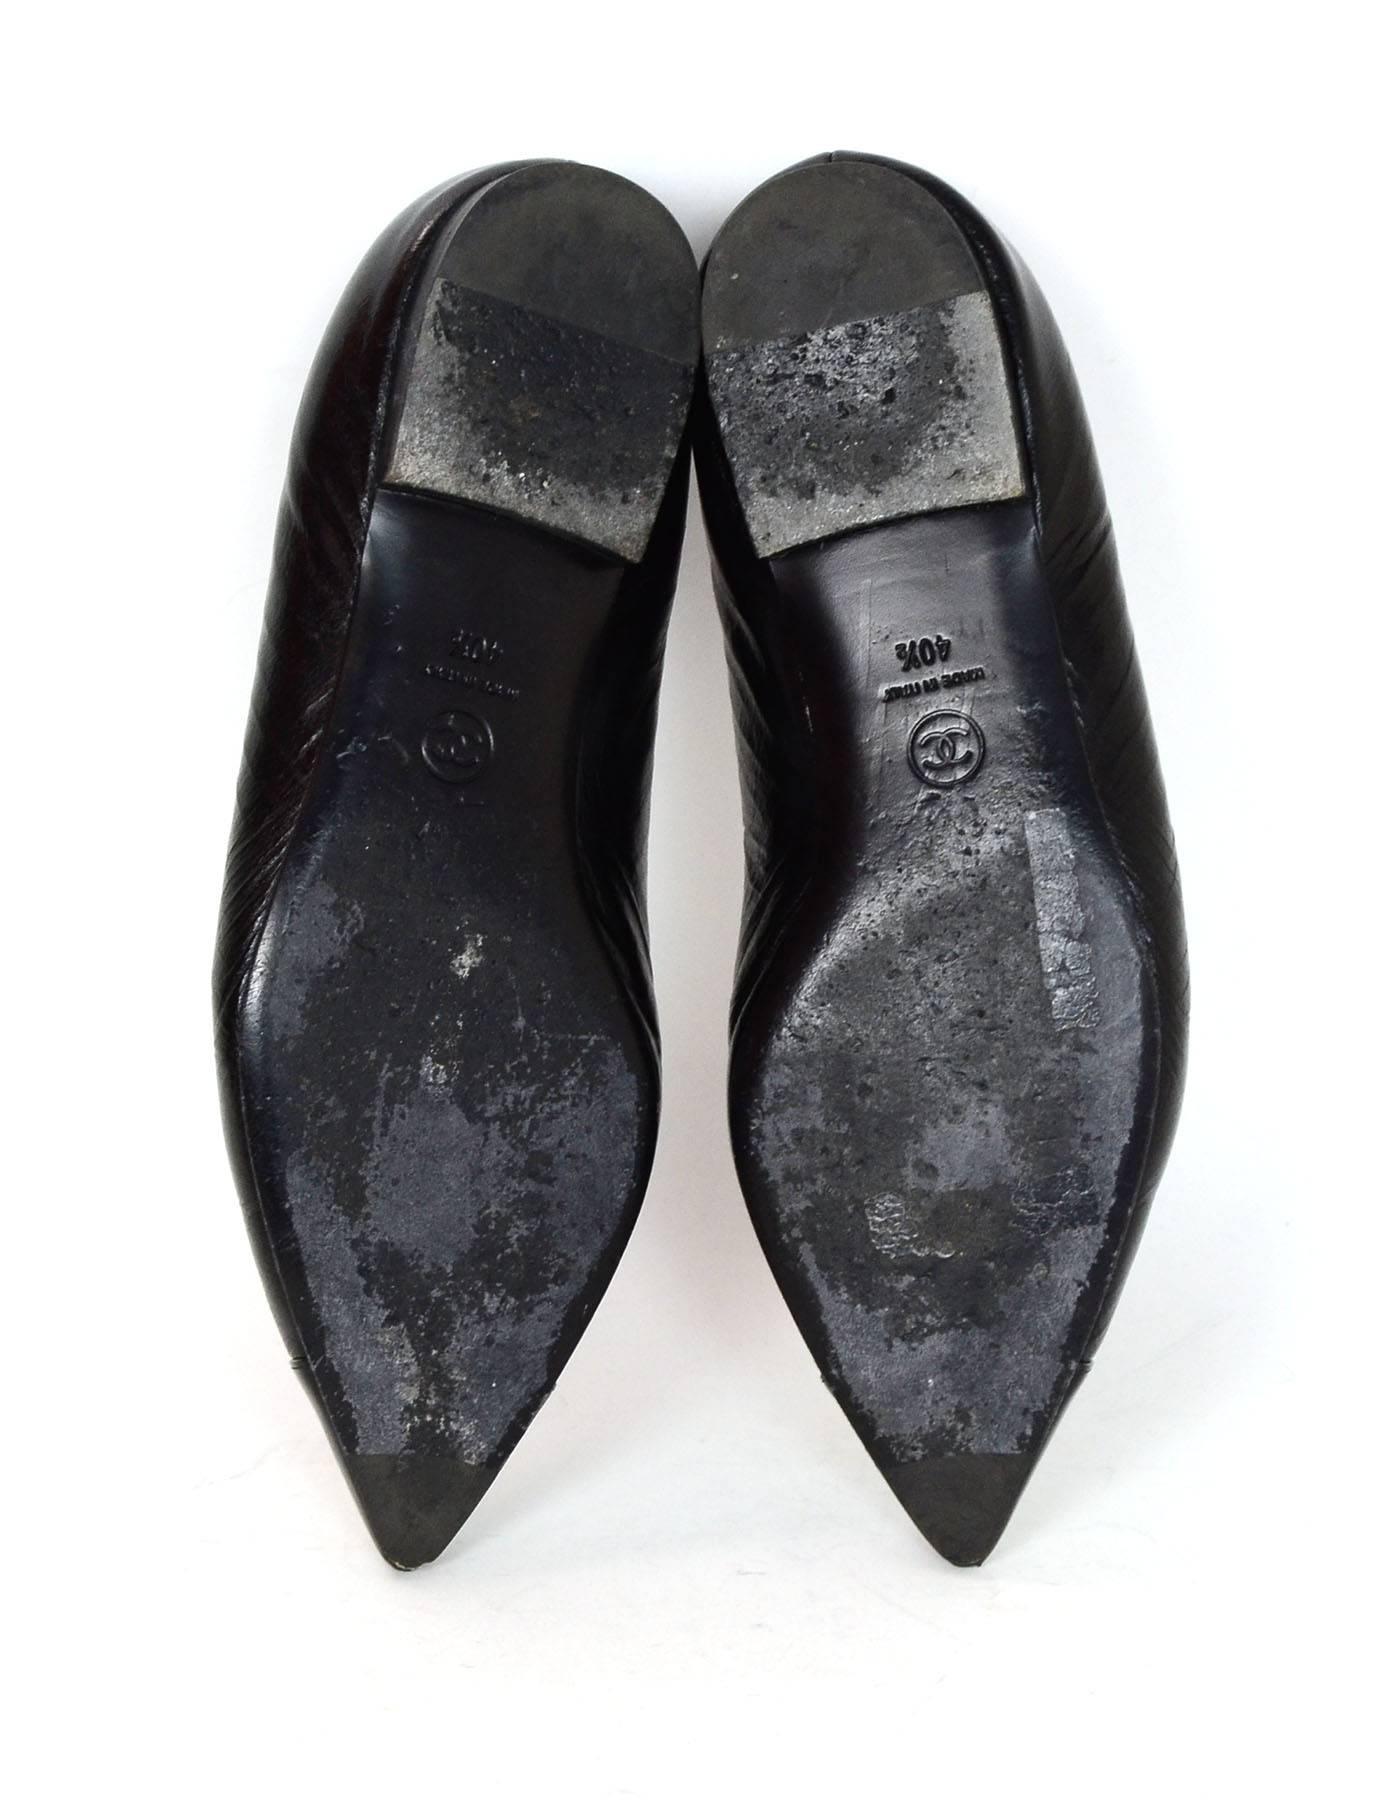 Chanel Black Leather & Patent Cap-Toe Flats Sz 40.5 1